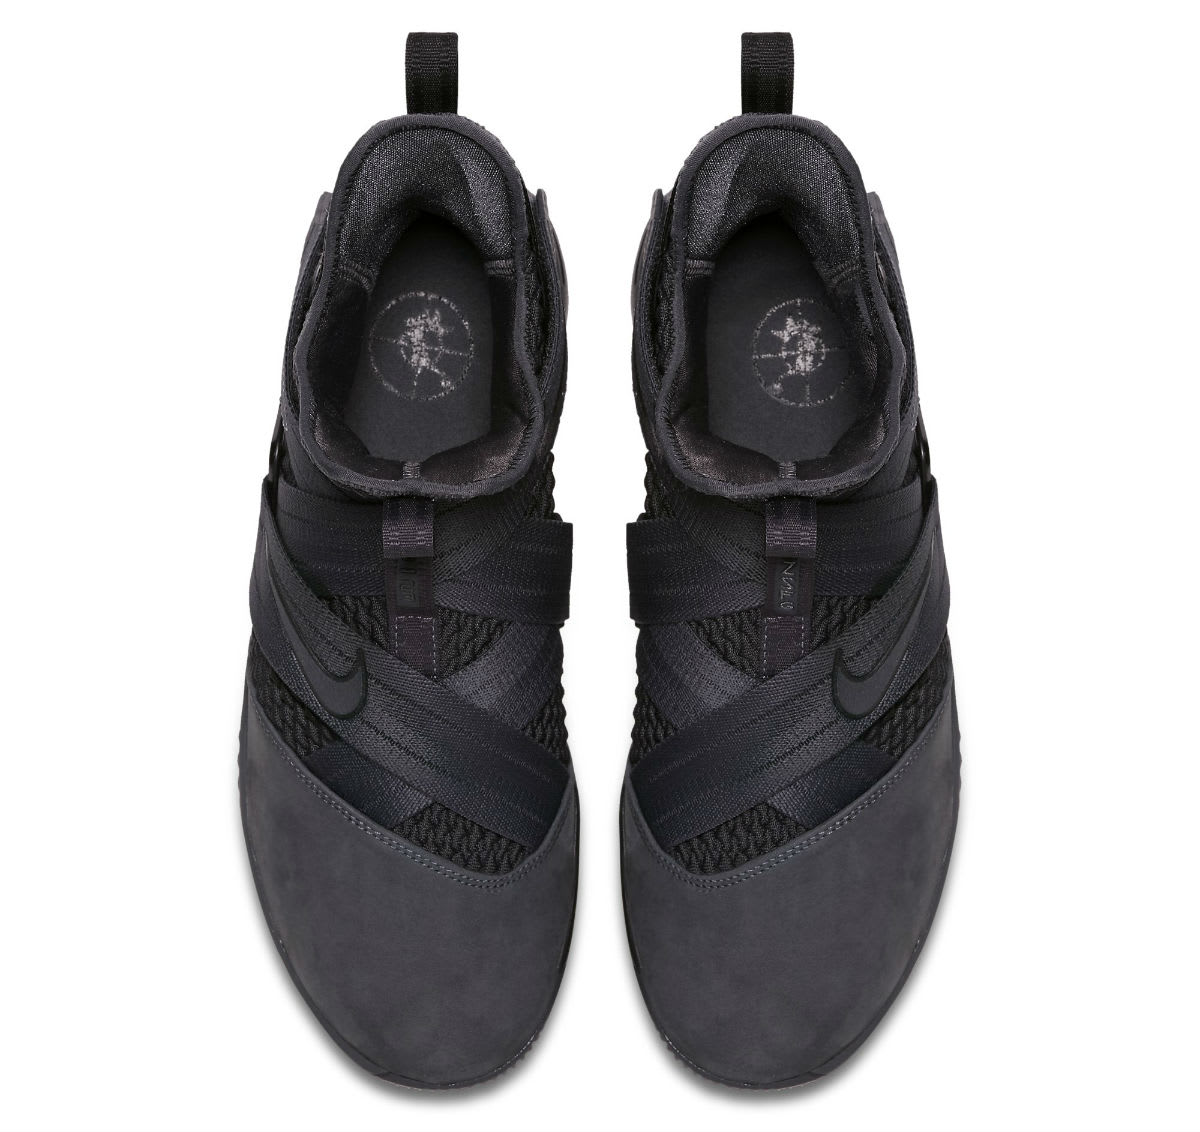 Nike LeBron Soldier 12 XII Zero Dark Thirty Triple Black Release Date AO4054-002 Top